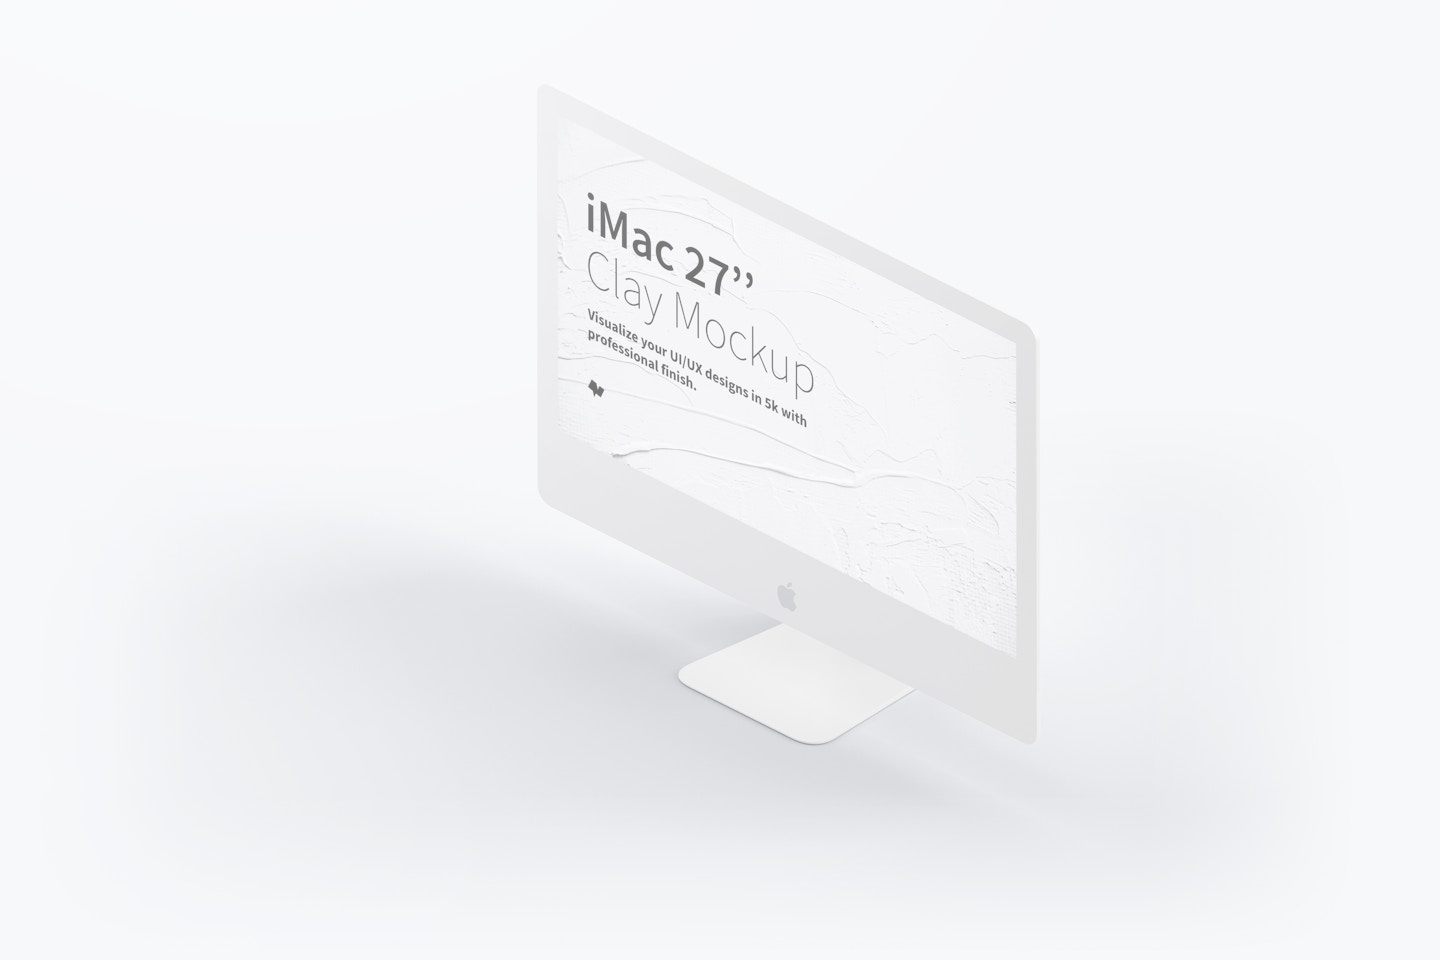 Clay iMac 27” Mockup, Isometric Right View